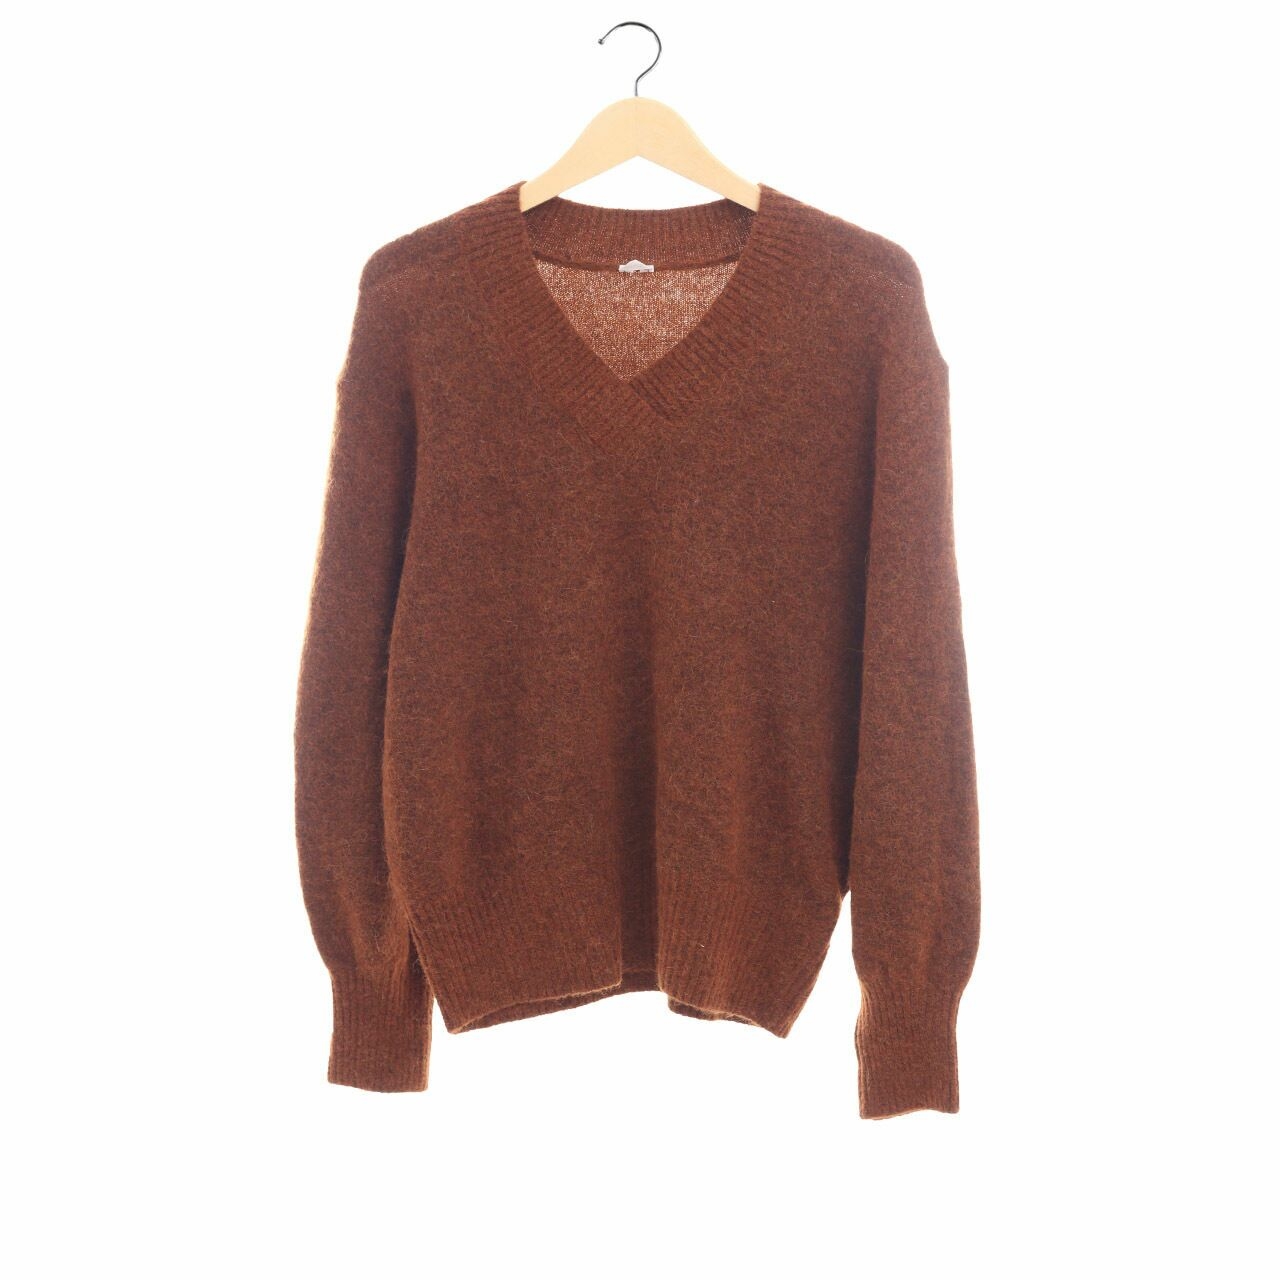 Arket Burnt Orange Knit Sweater